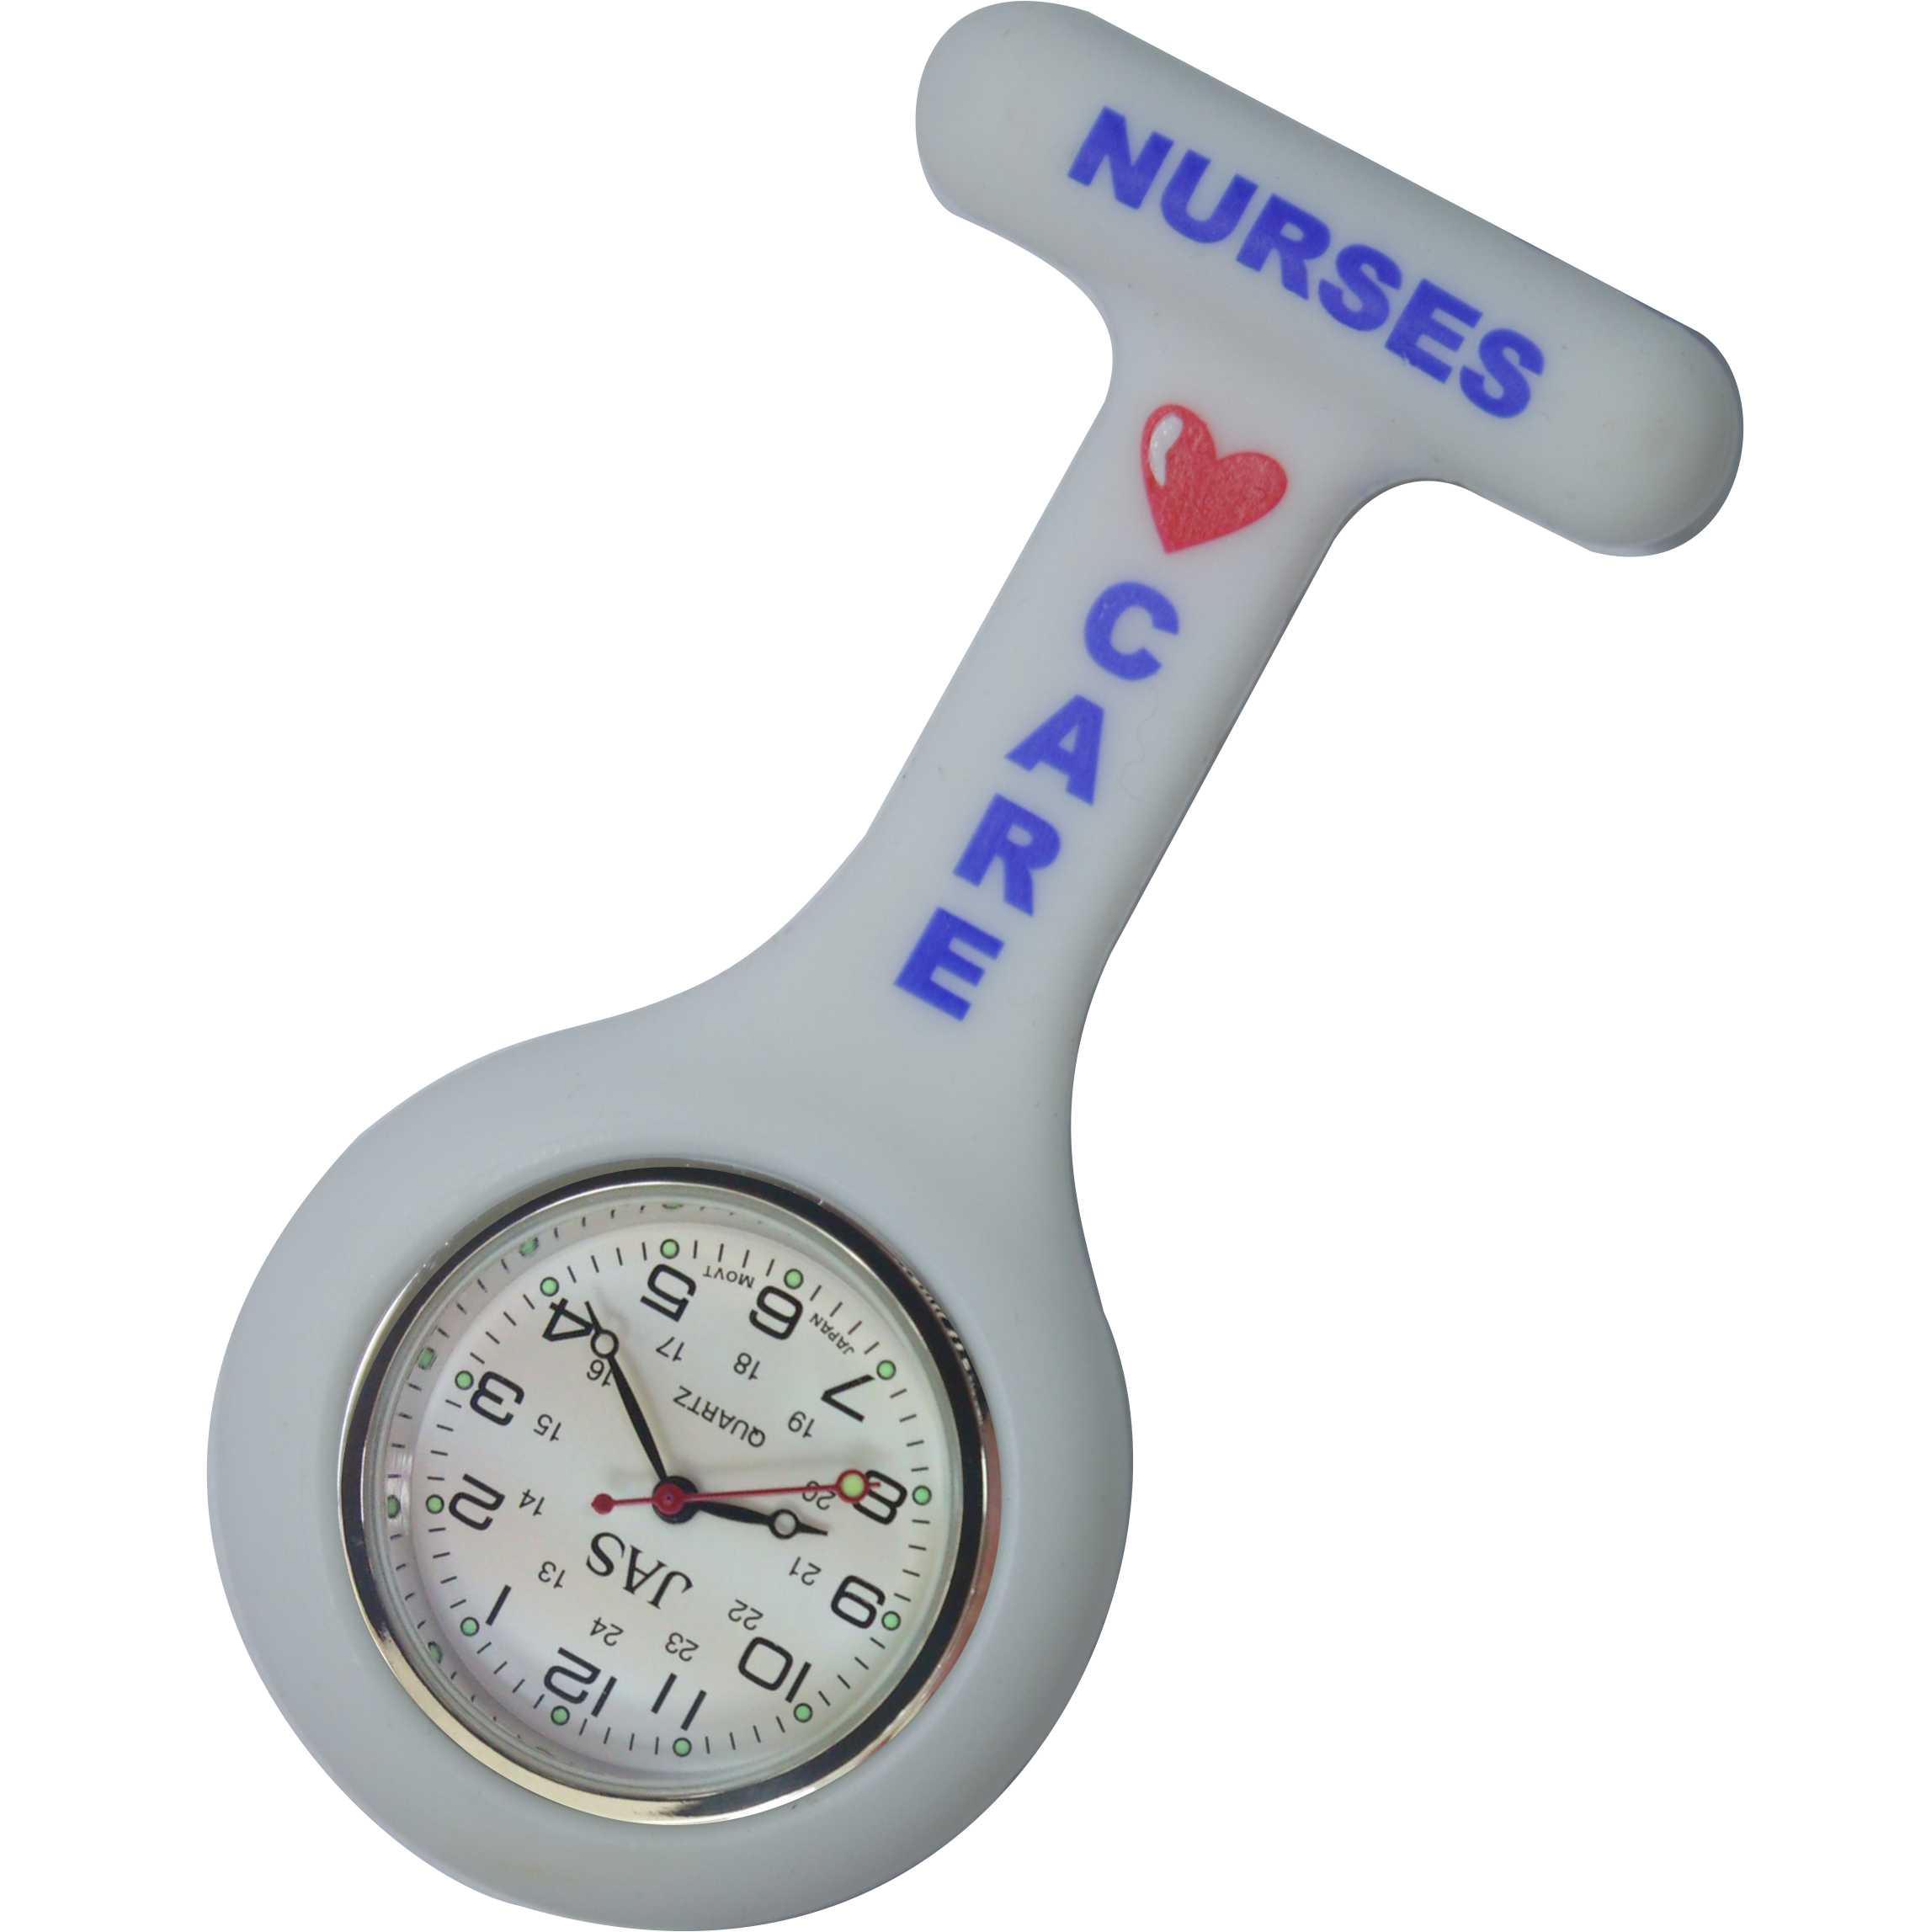 Nurse Pin Watch Silicone "NURSES CARE" White